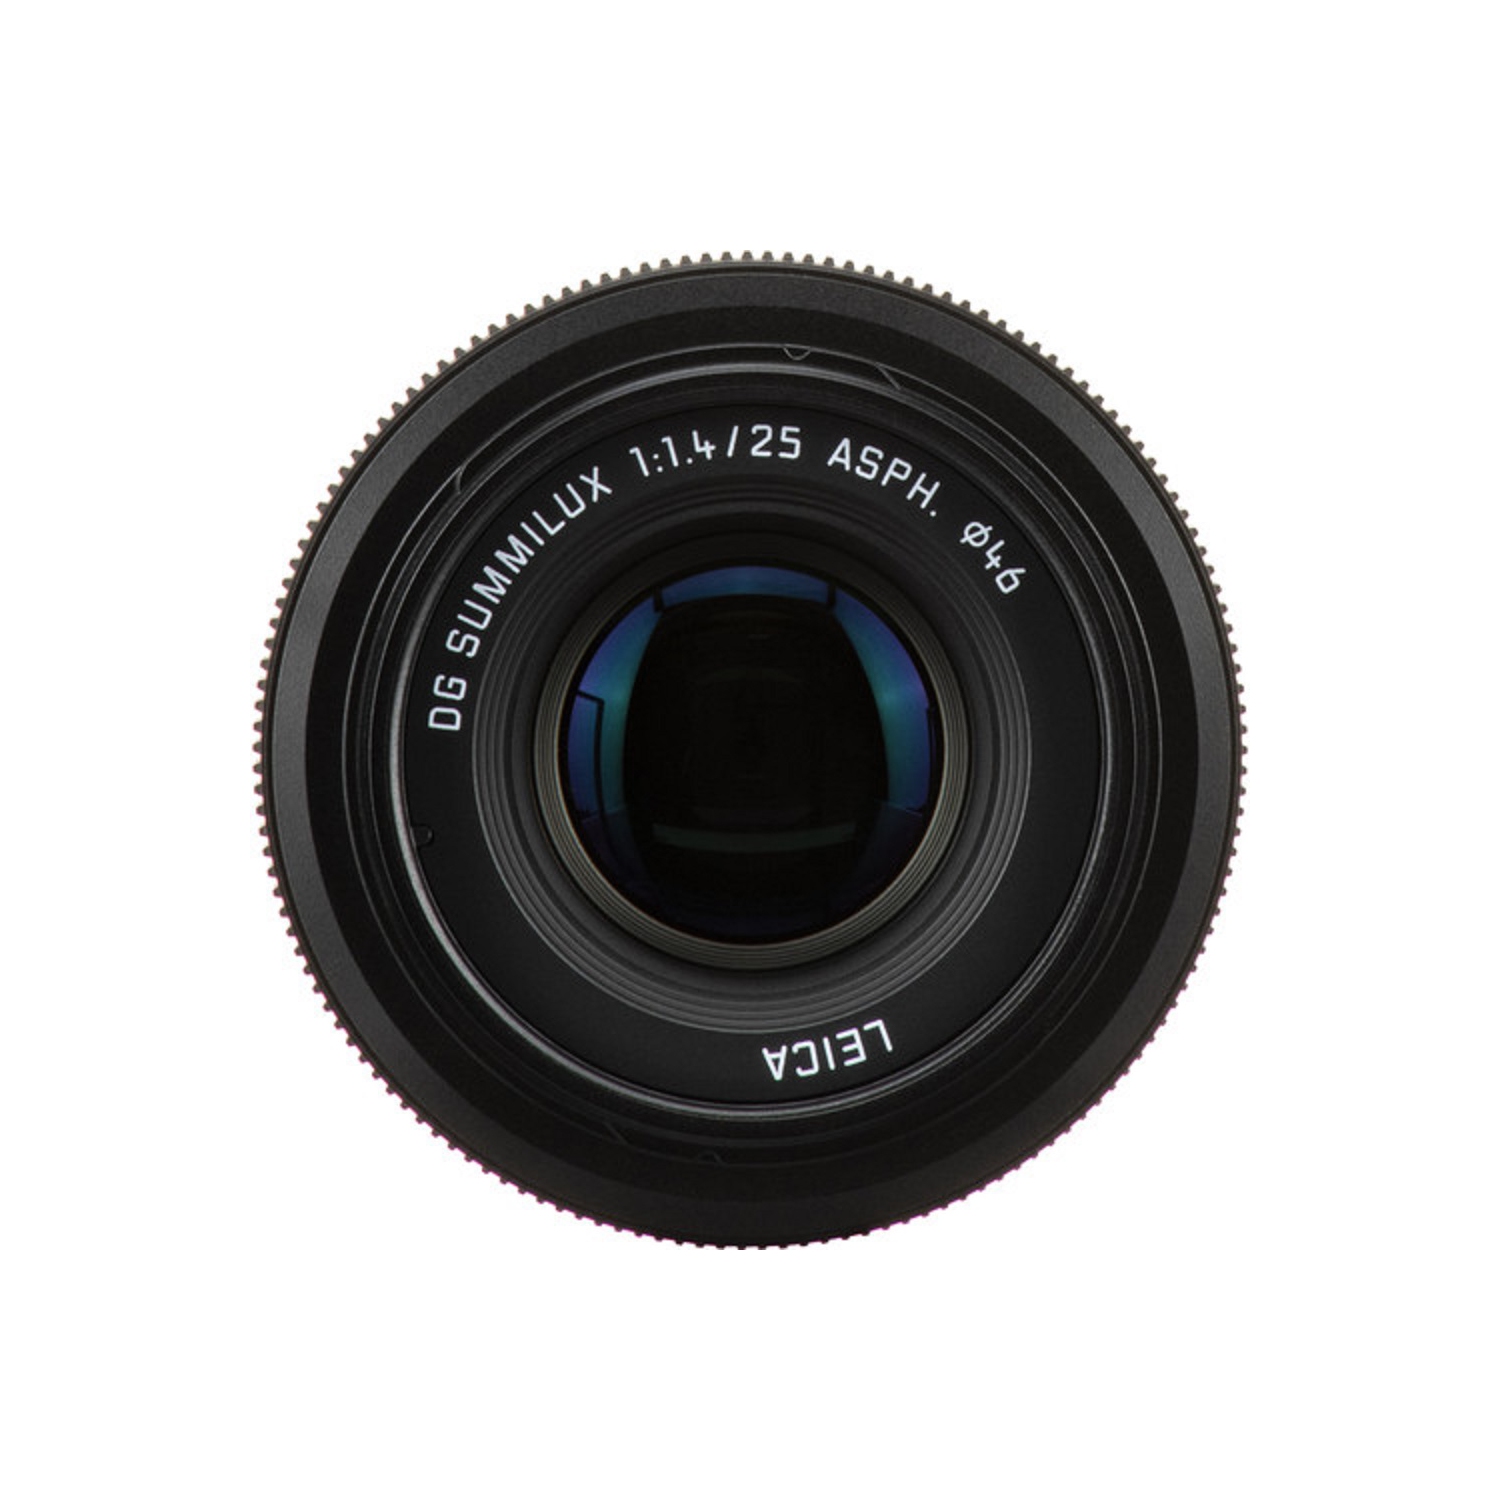 Panasonic Leica DG Summilux 25mm f/1.4 II ASPH. Lens - 12PC